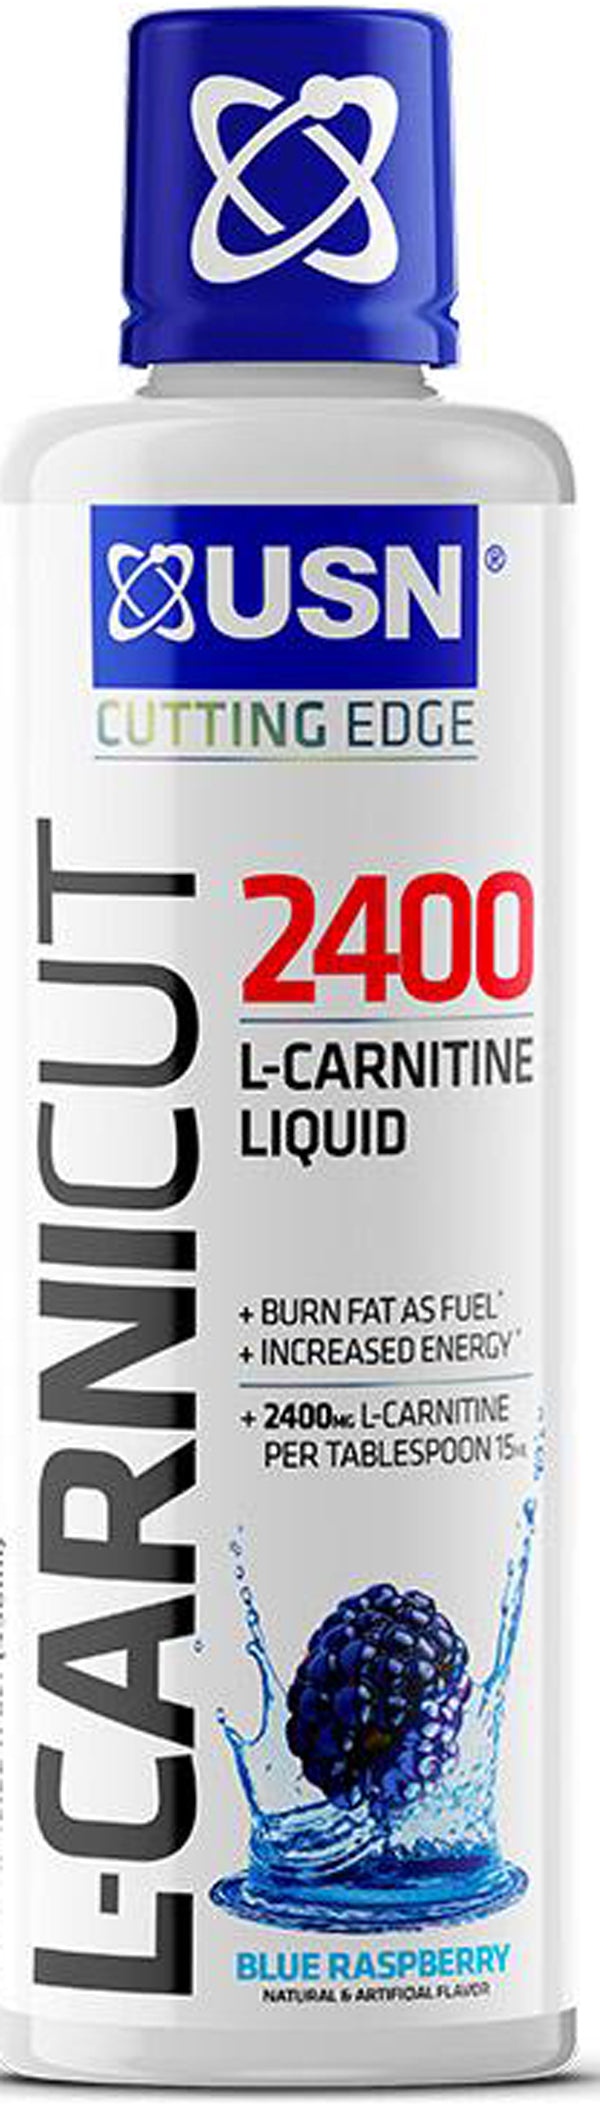 USN L-Carnicut Liquid 2400 31 servings-3